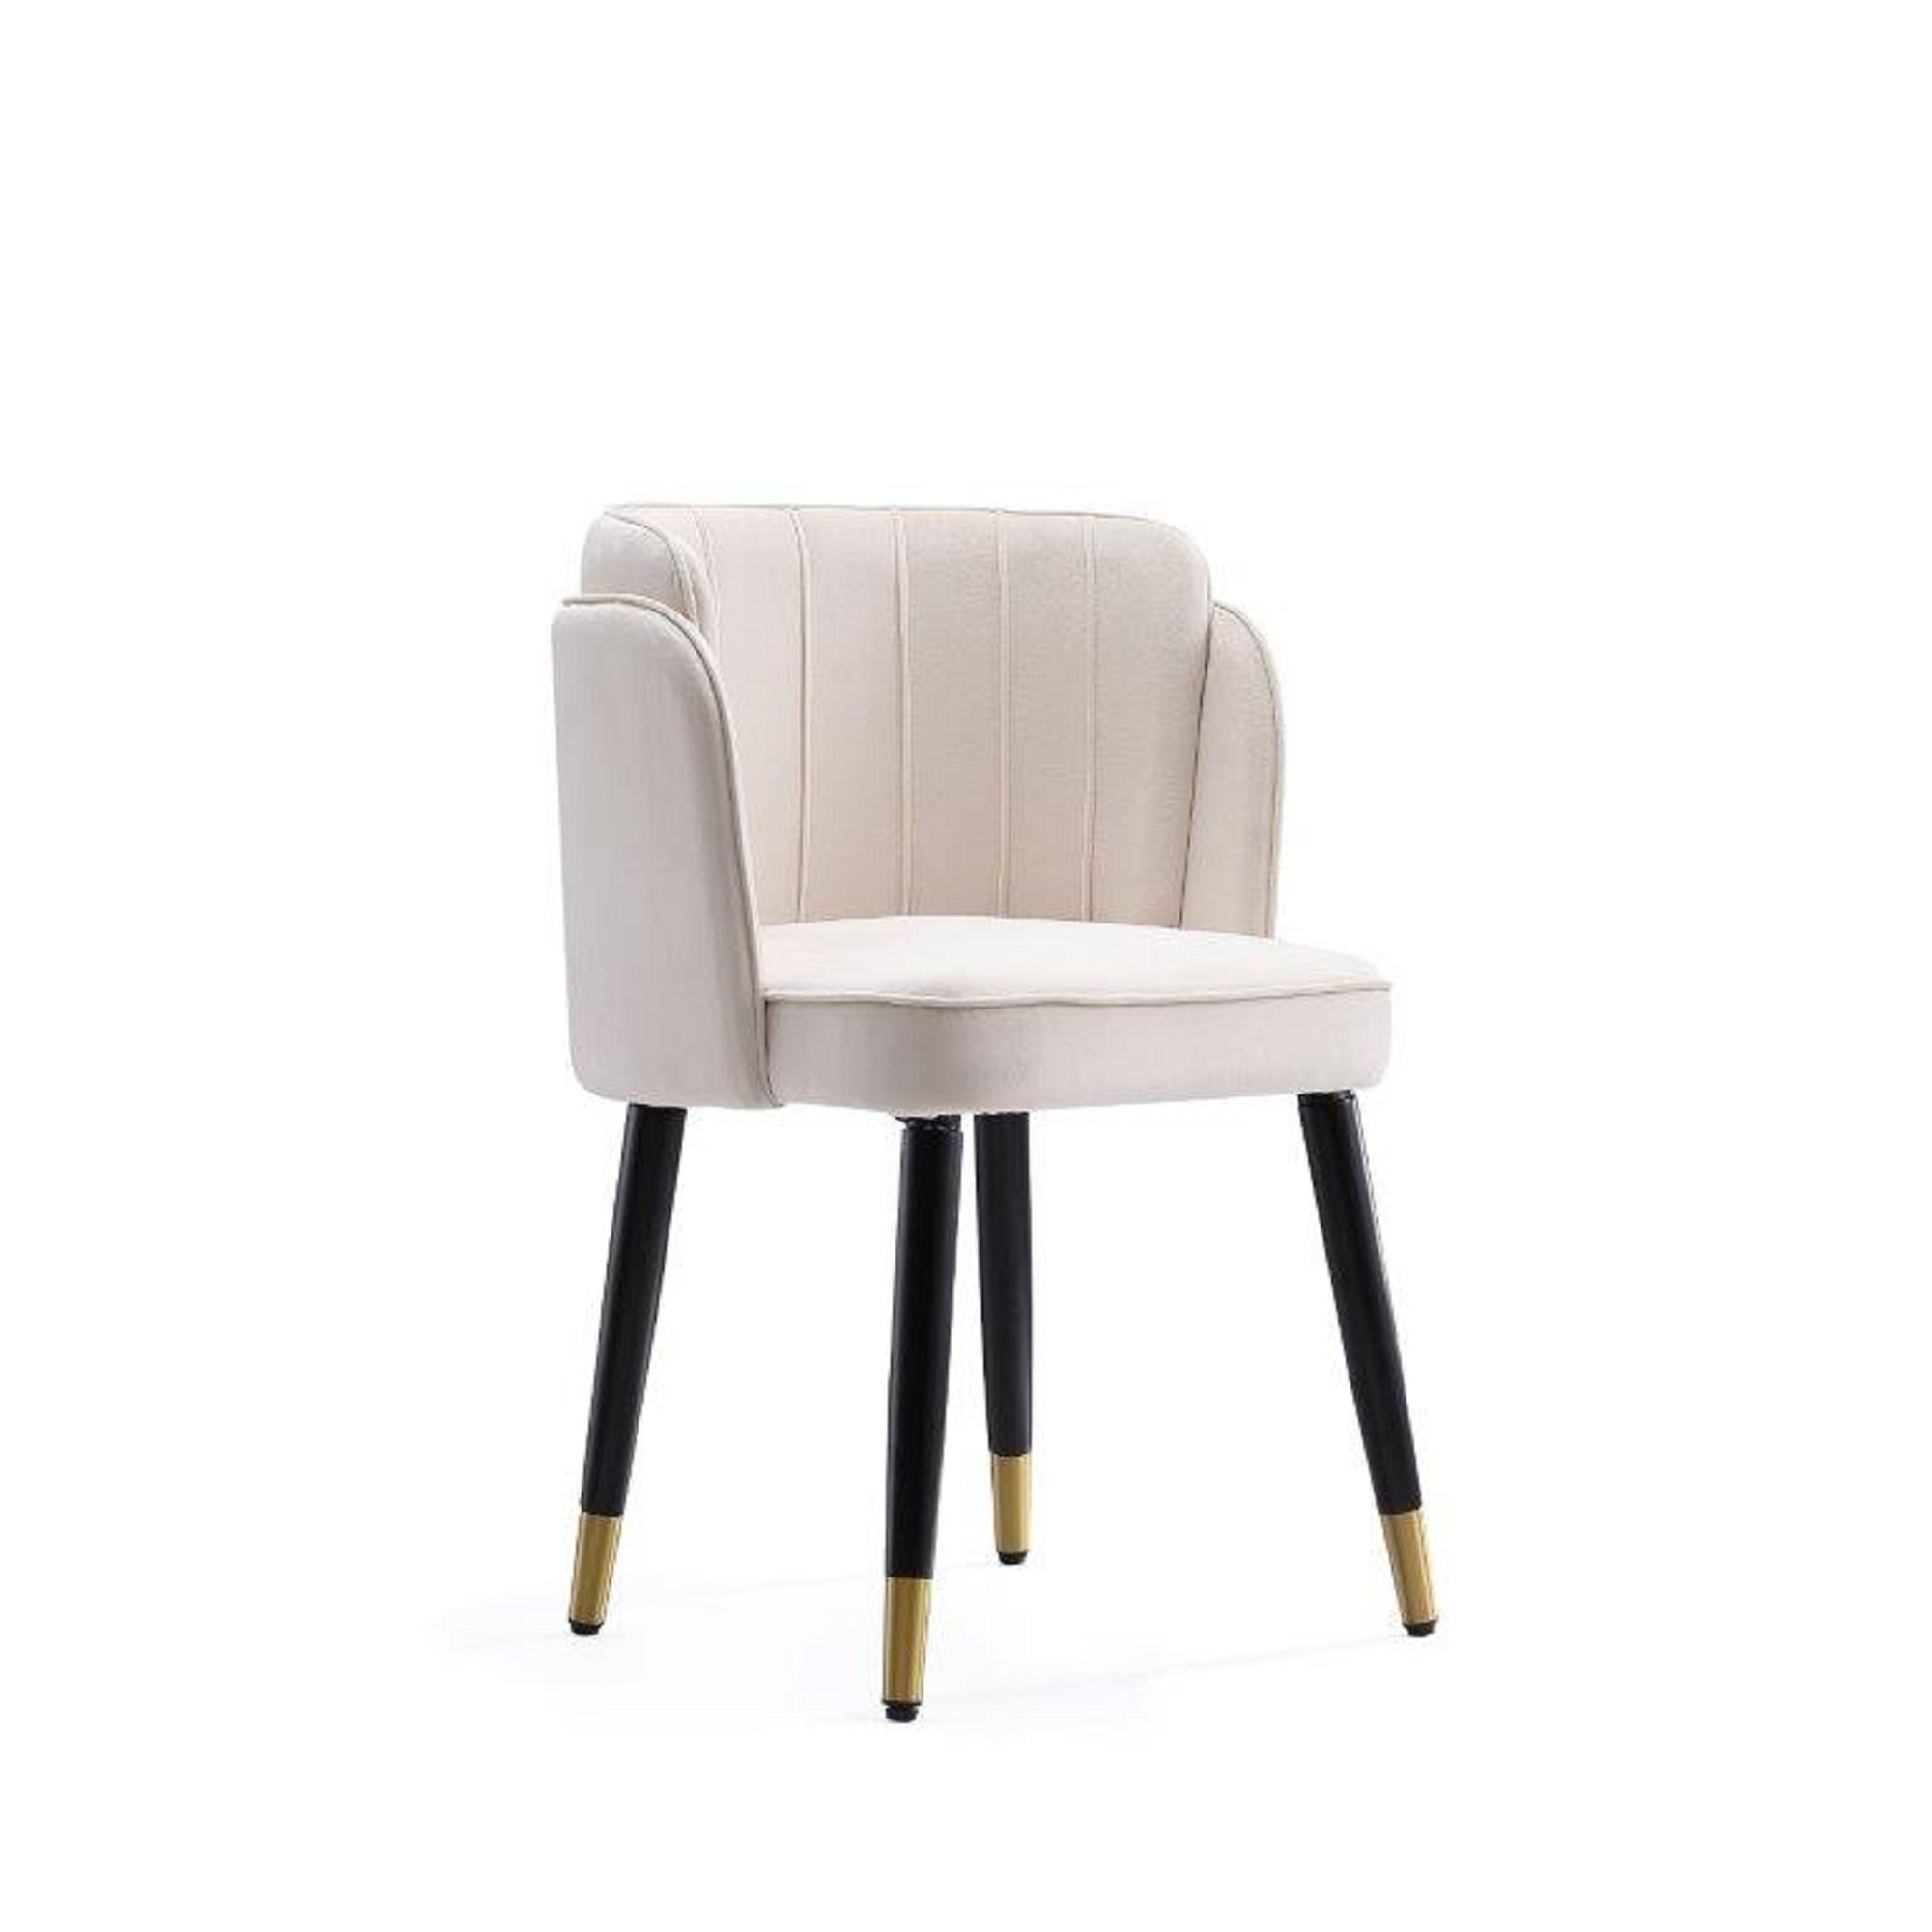 Manhattan Comfort, Zephyr Velvet Chair in Cream, Primary Color Cream, Included (qty.) 1 Model DC043